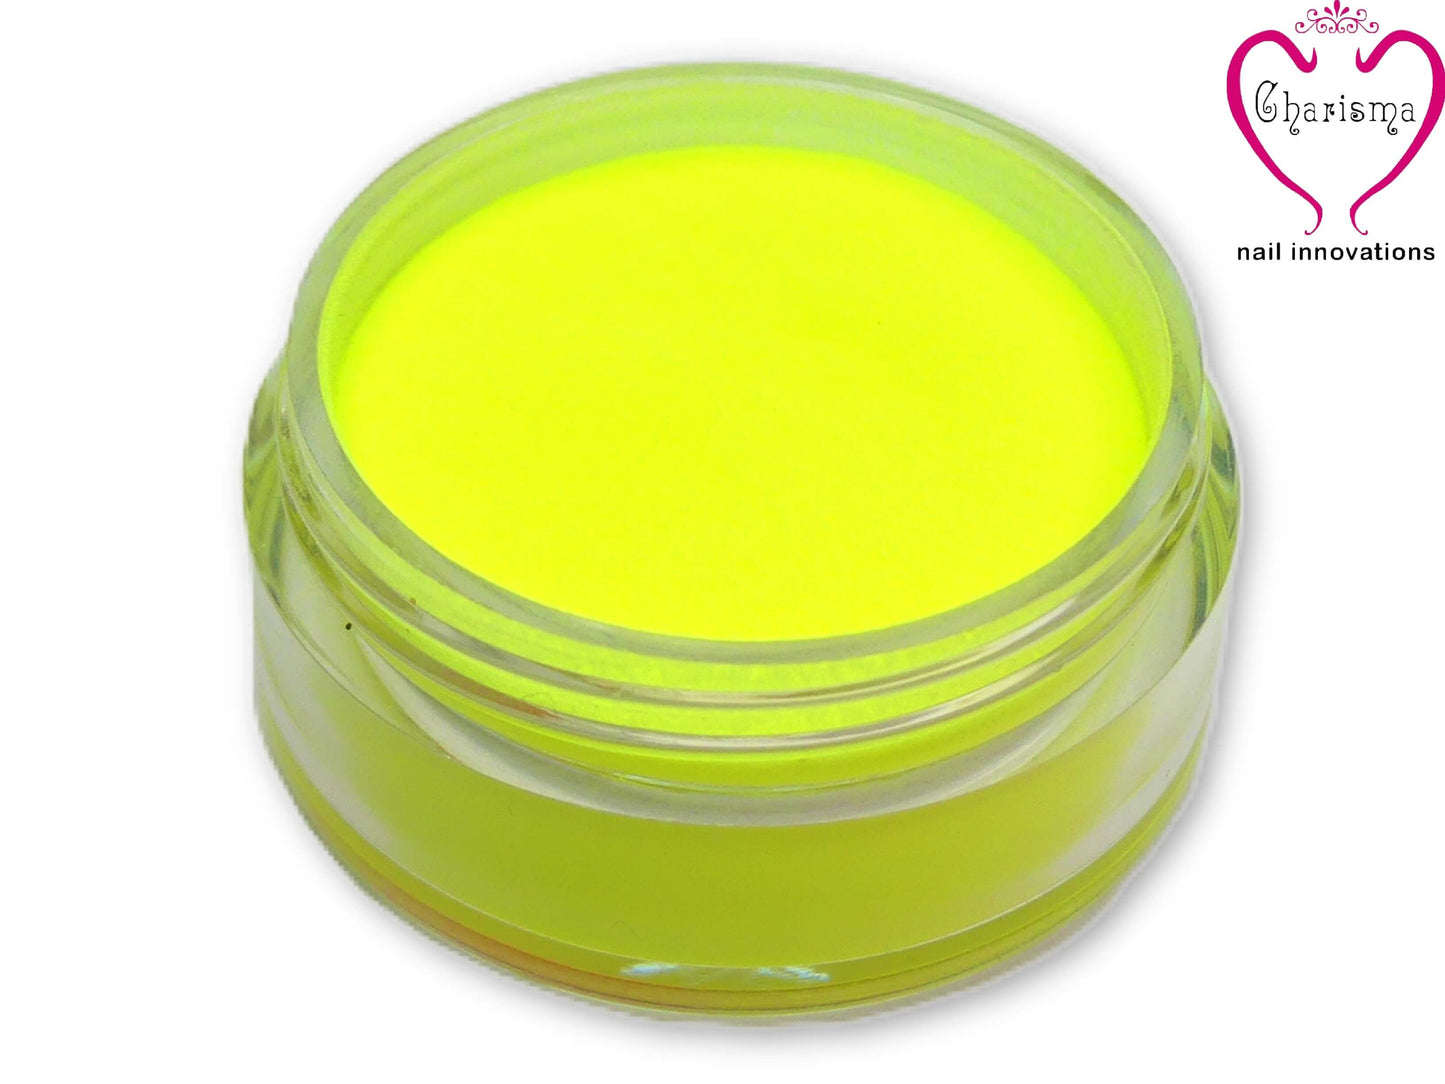 Charisma Nail Acrylic Powder - Neon Yellow - My Little Nail Art Shop